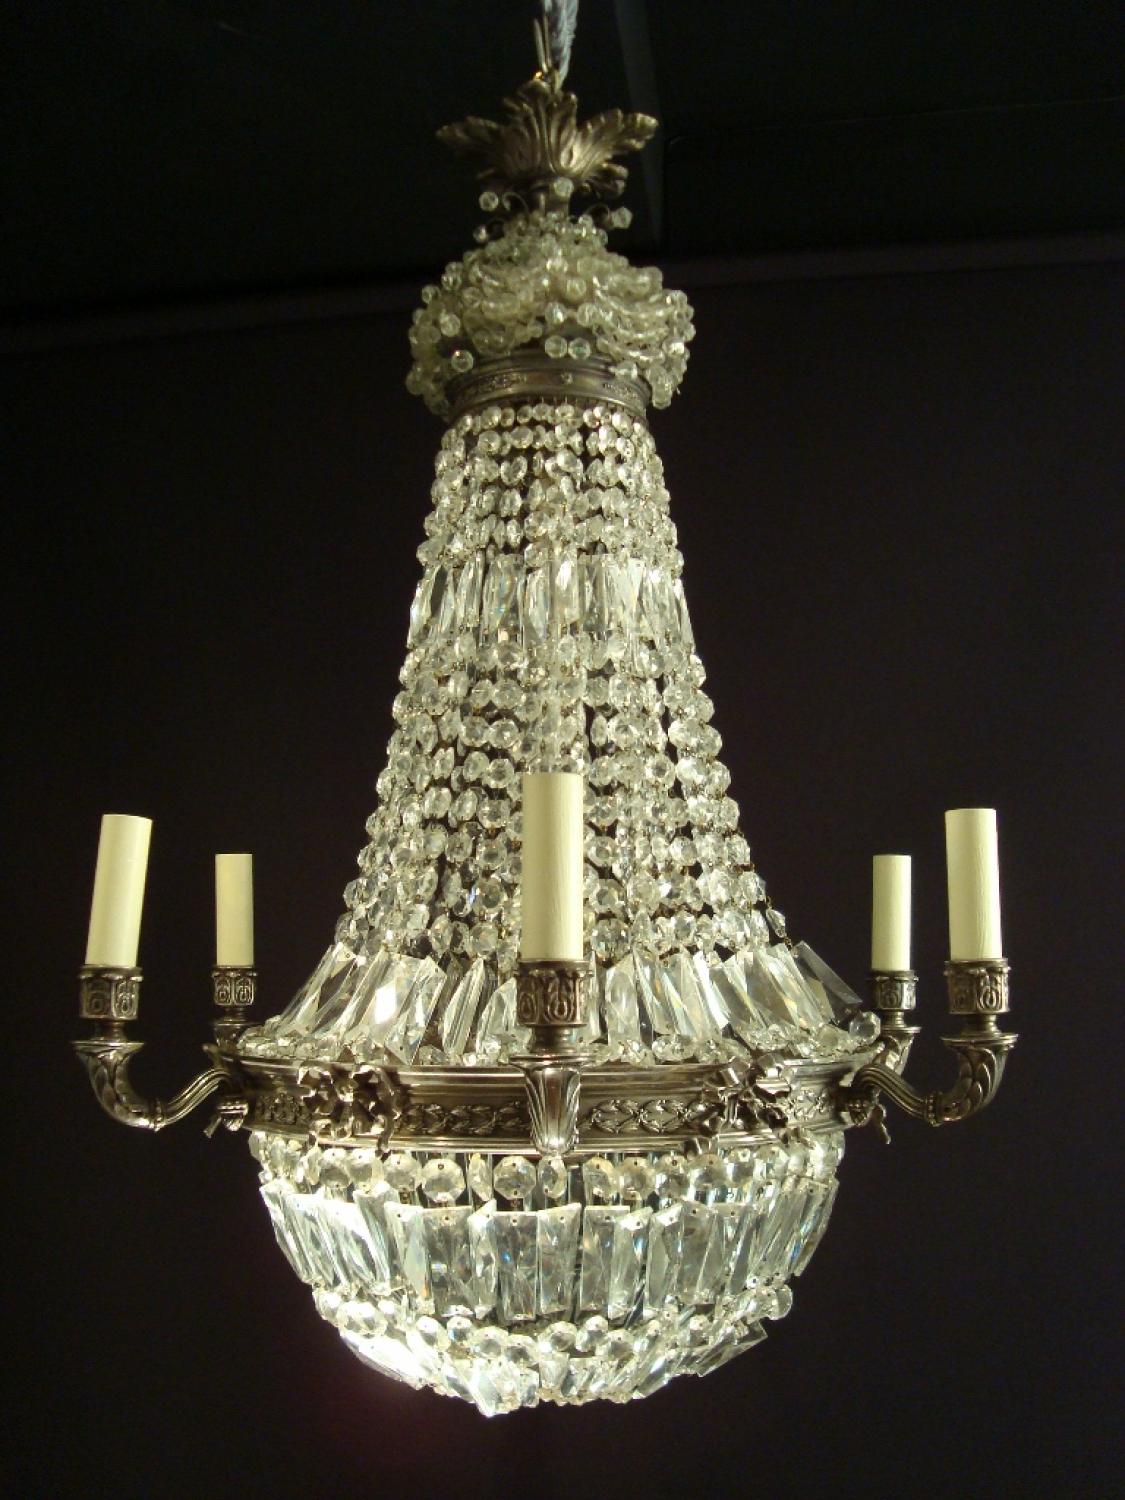 A Victorian waterfall chandelier